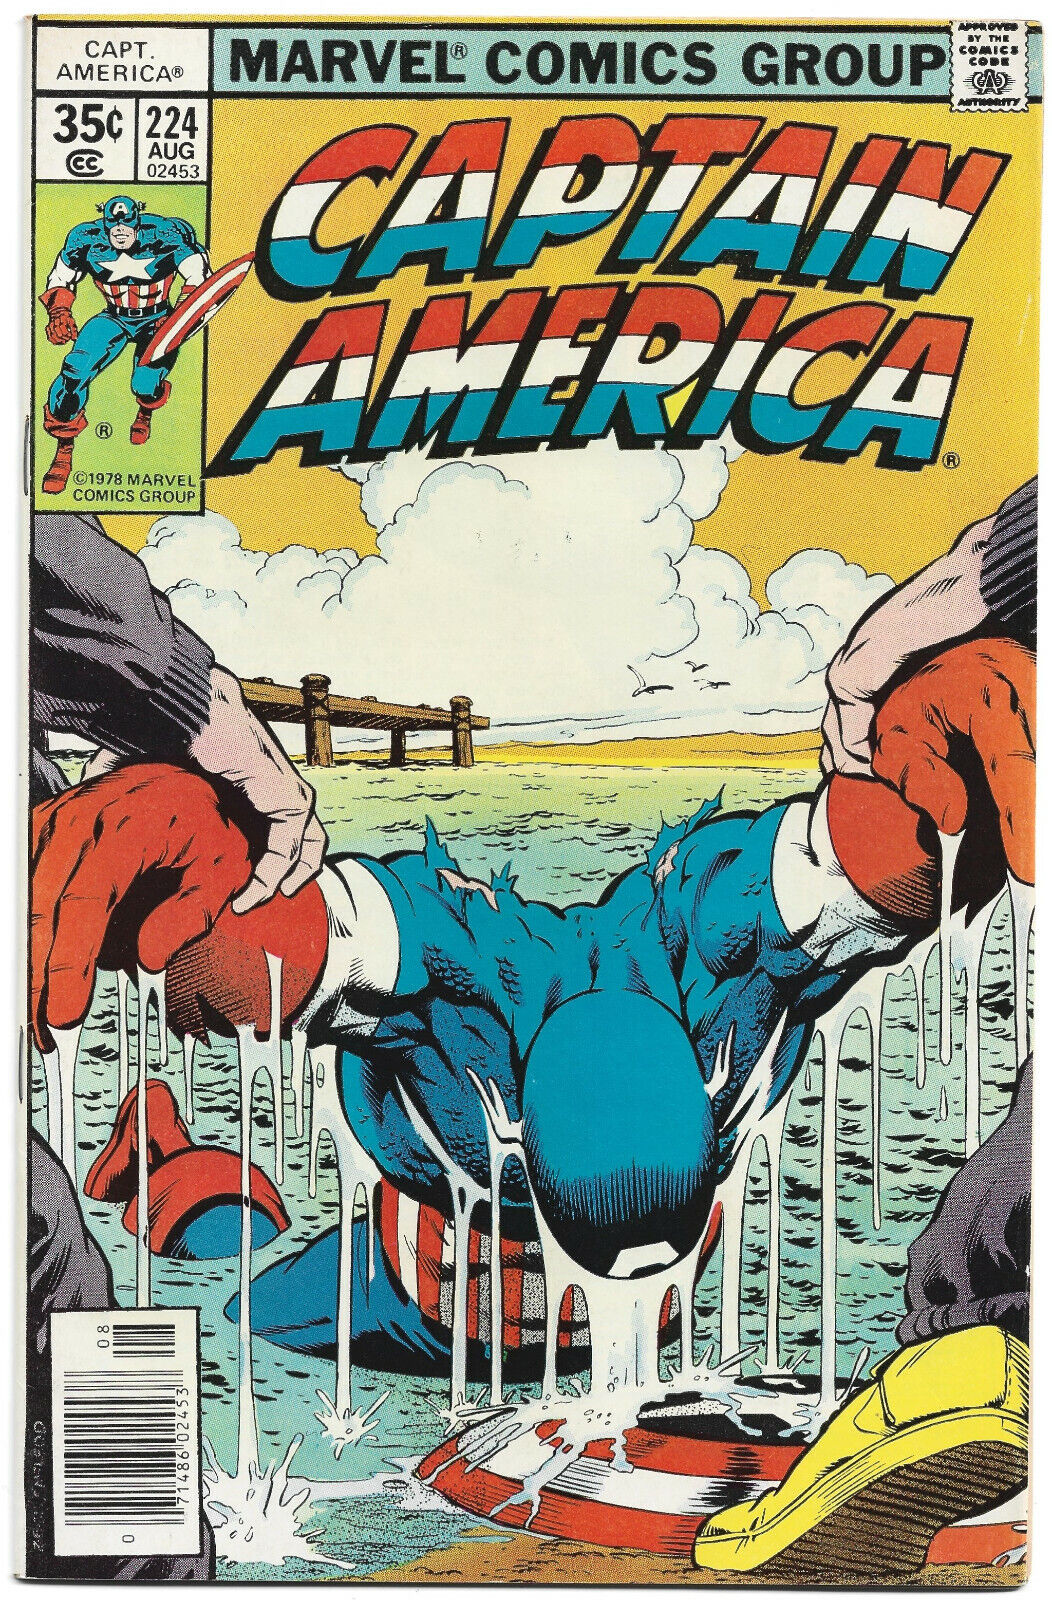 Marvel Comics CAPTAIN AMERICA #224 (Aug 1978) Mike Zeck Mike Esposito Bob McLeod